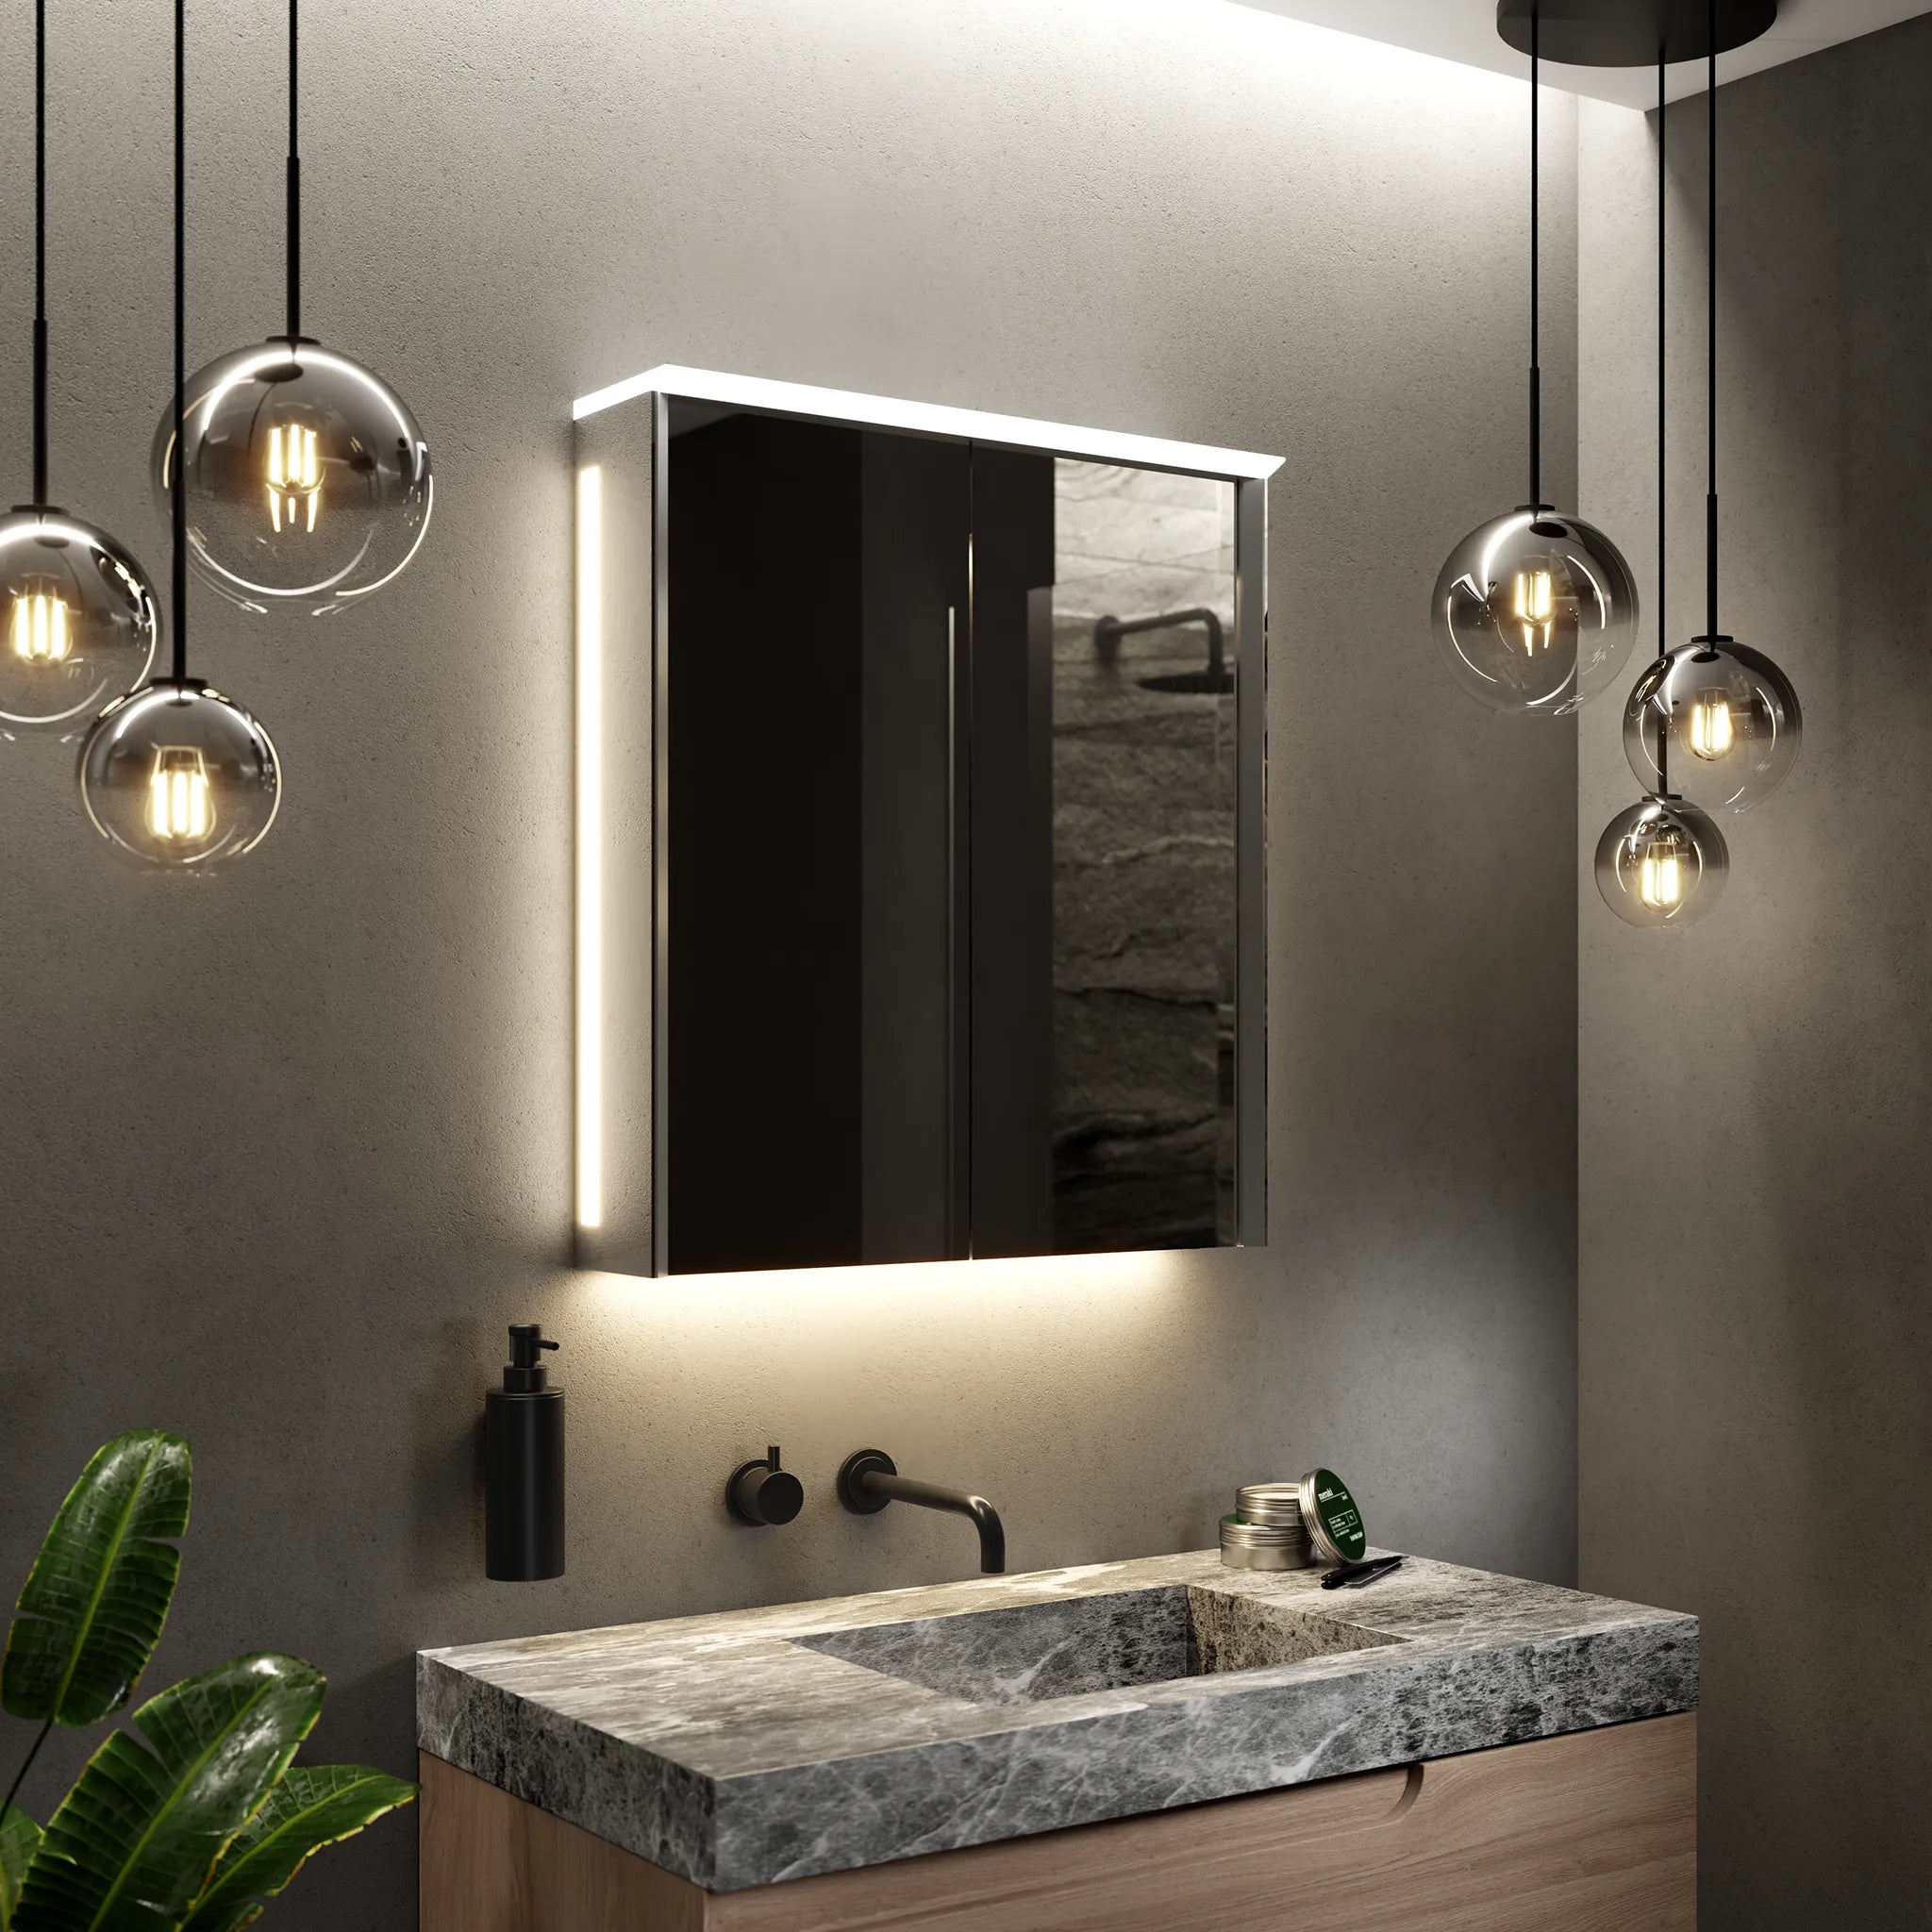 Illuminated Bathroom Cabinets - Pebble Grey